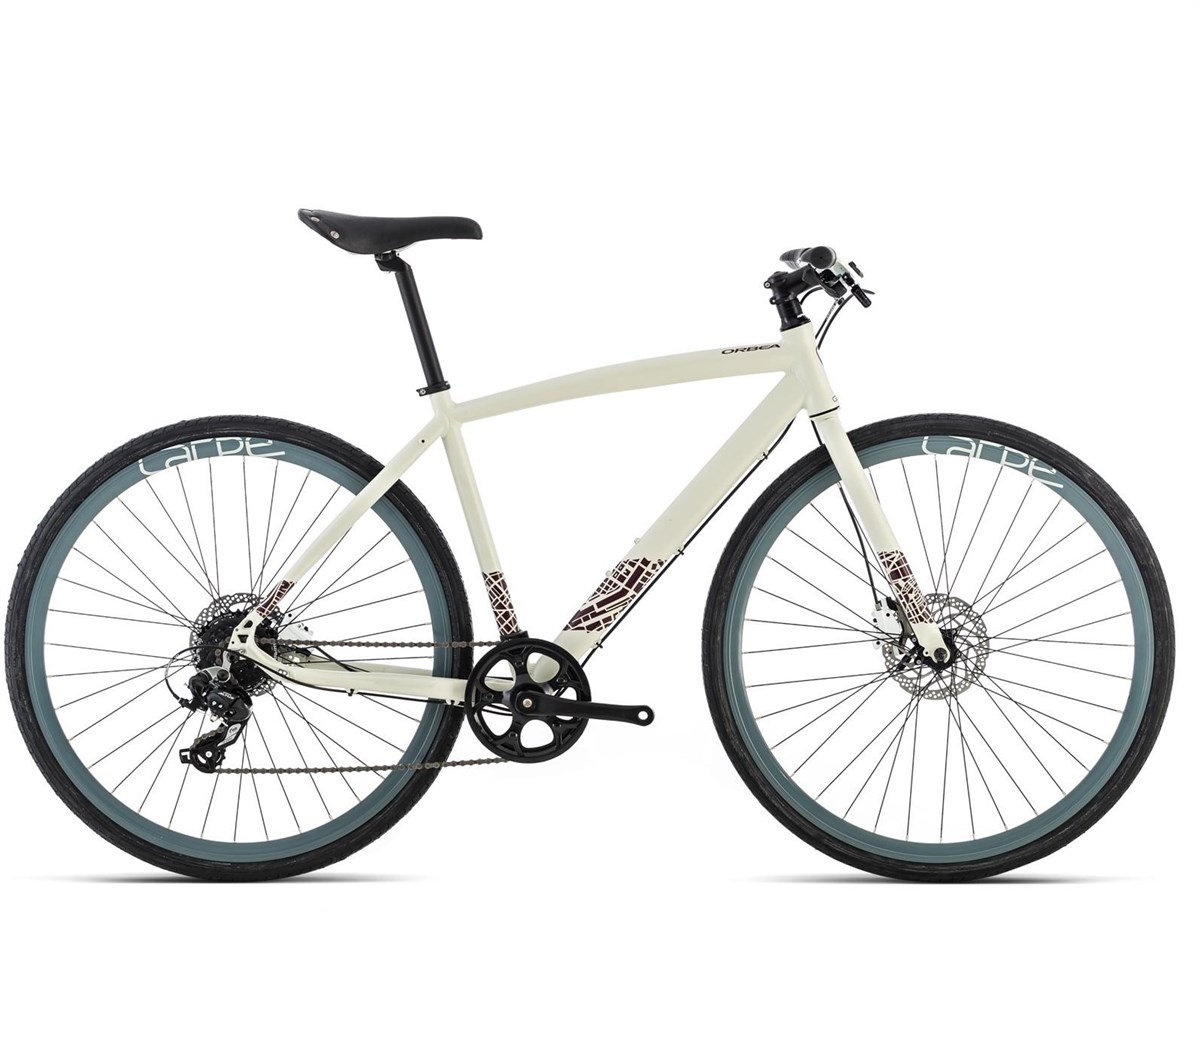 Orbea Carpe 30 2016 Hybrid Bike